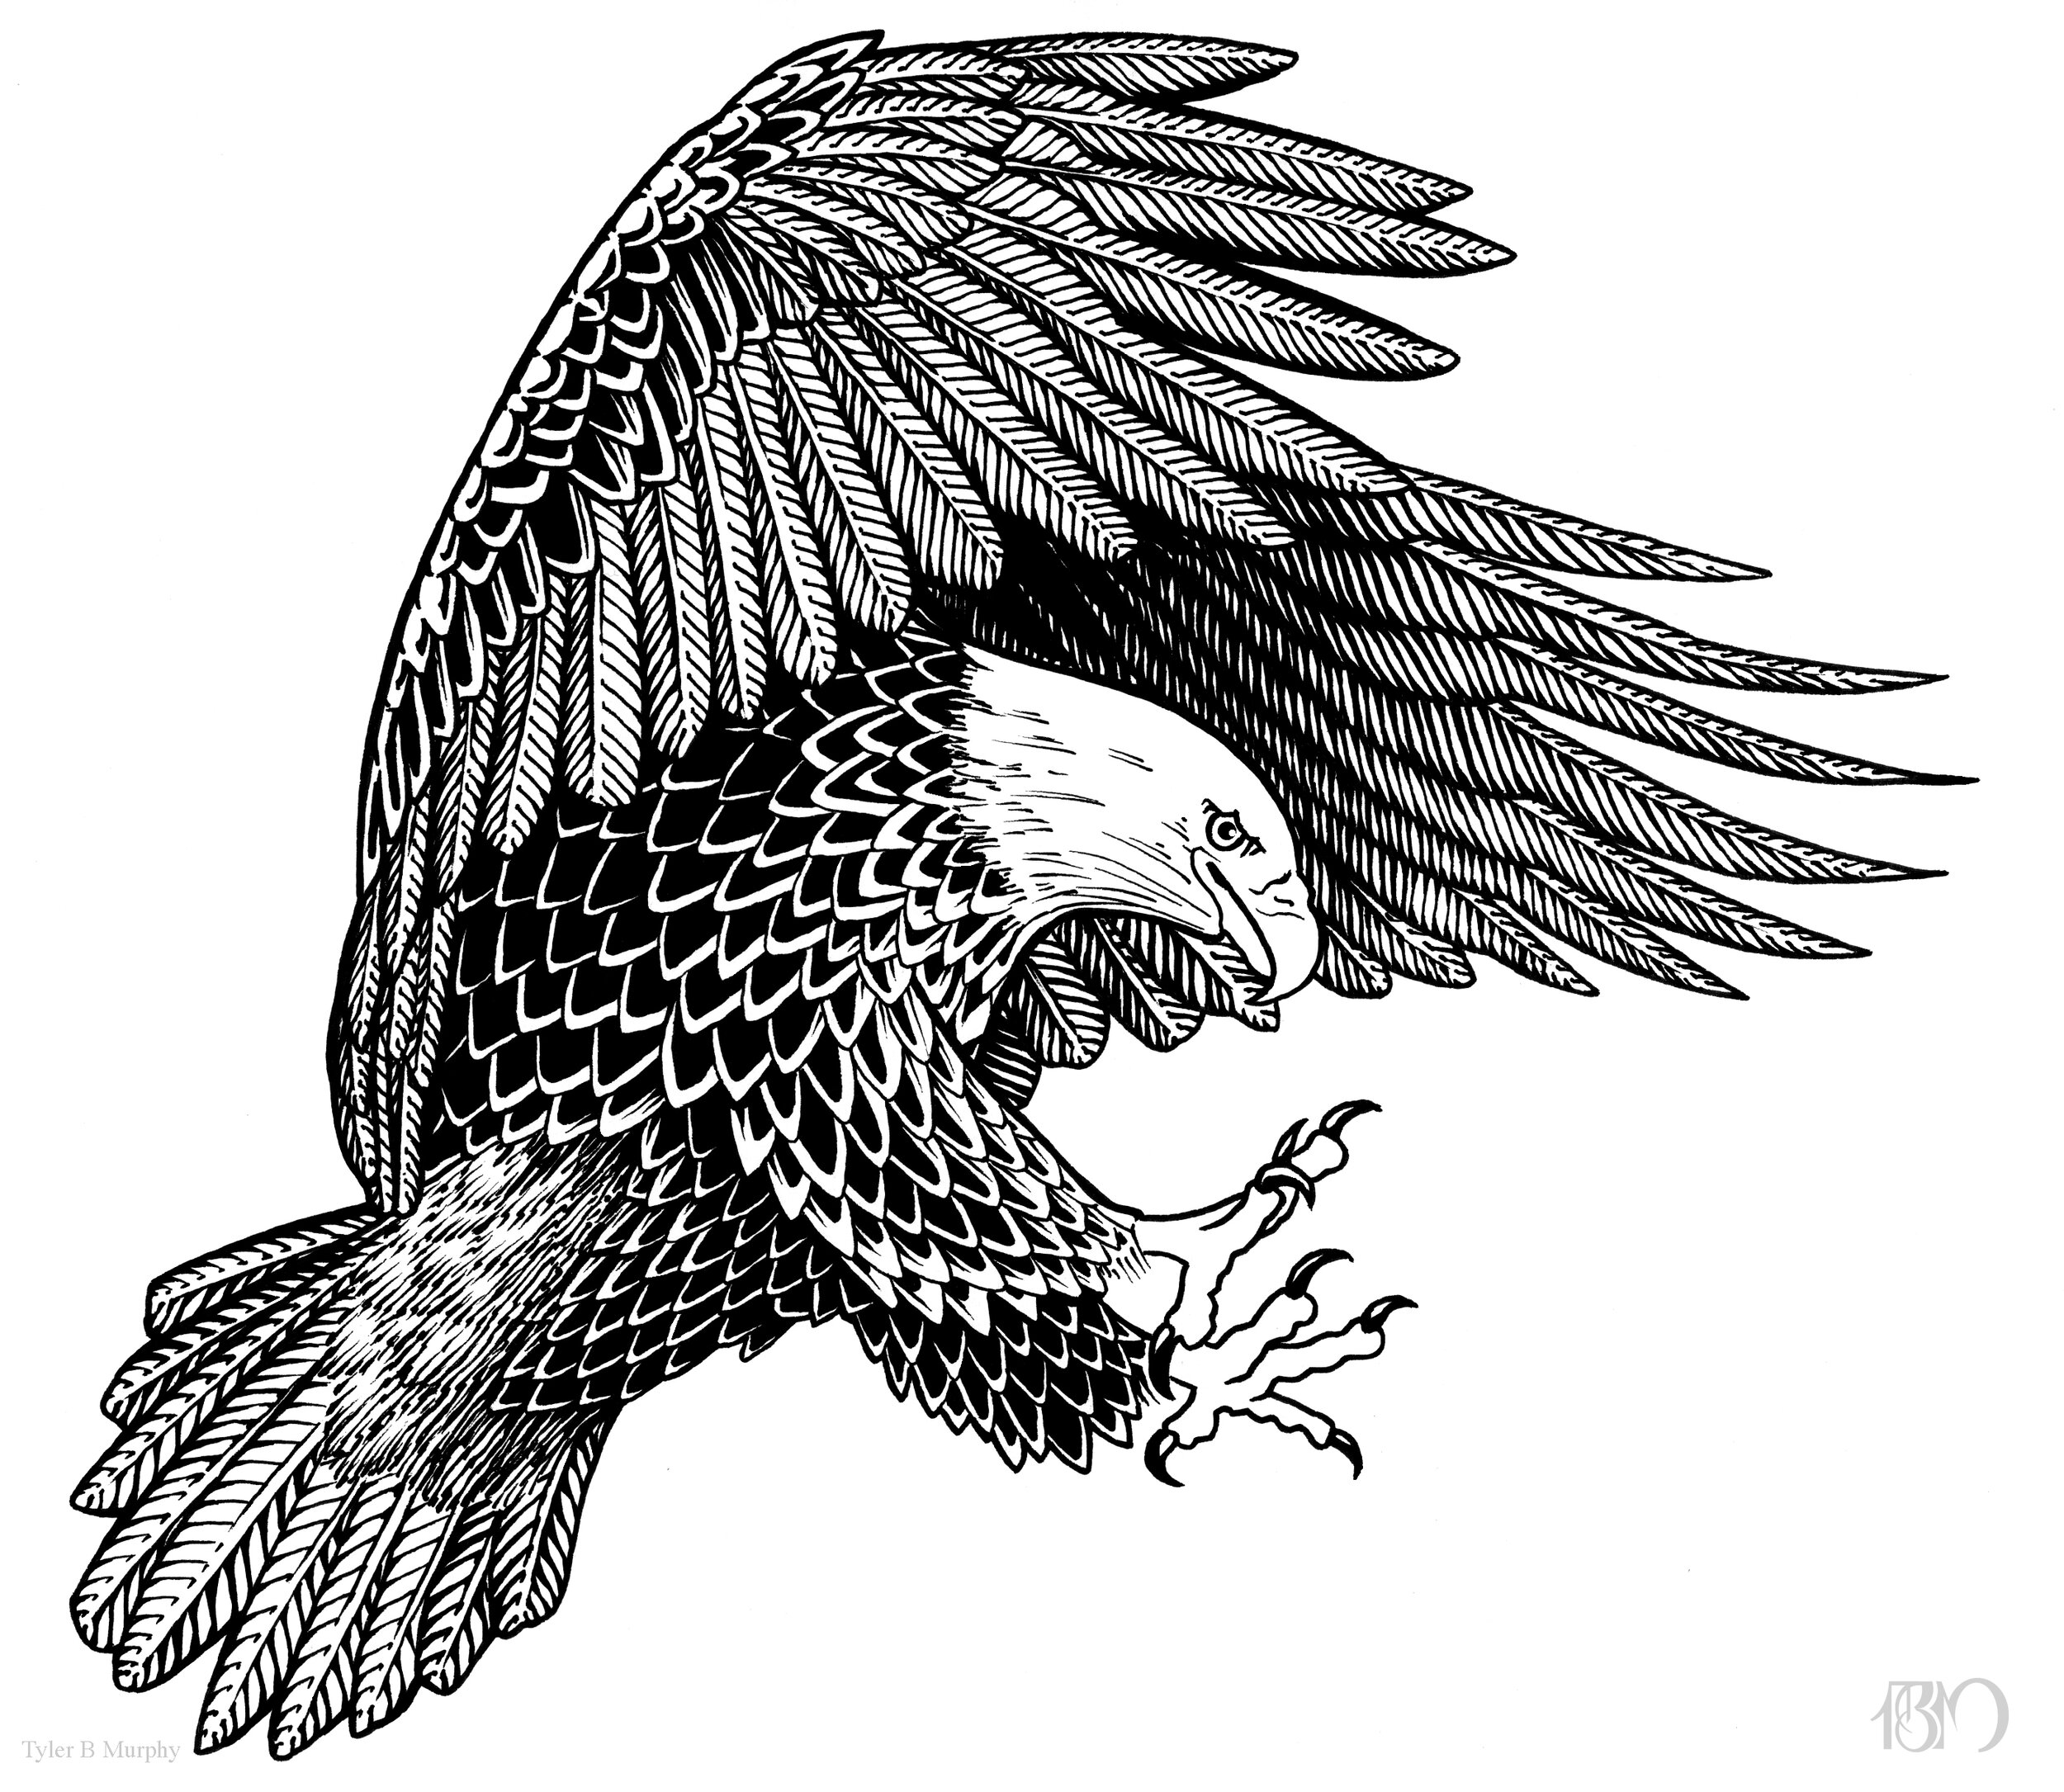 12 - Black Eagle illustration Tyler B Murphy.jpg